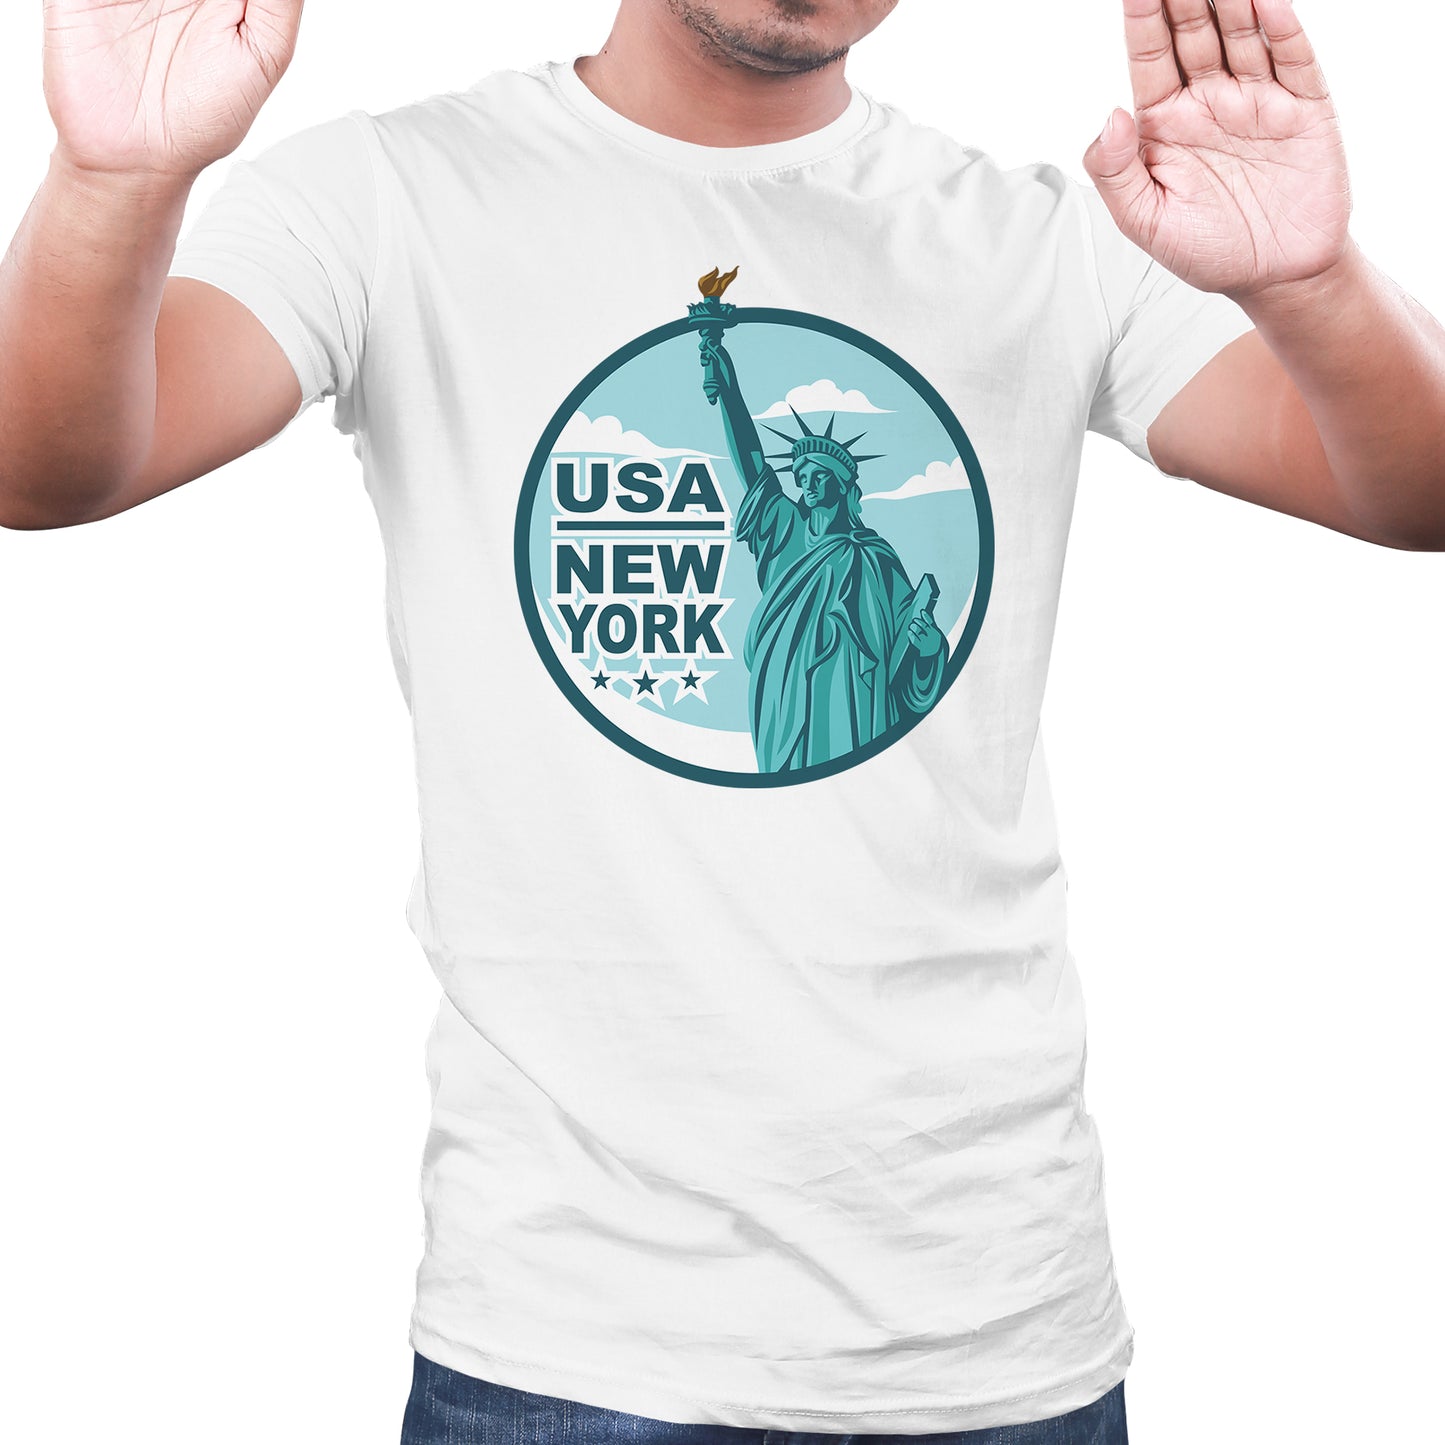 Travel the world & Holiday in usa newyork unisex t shirts - Black